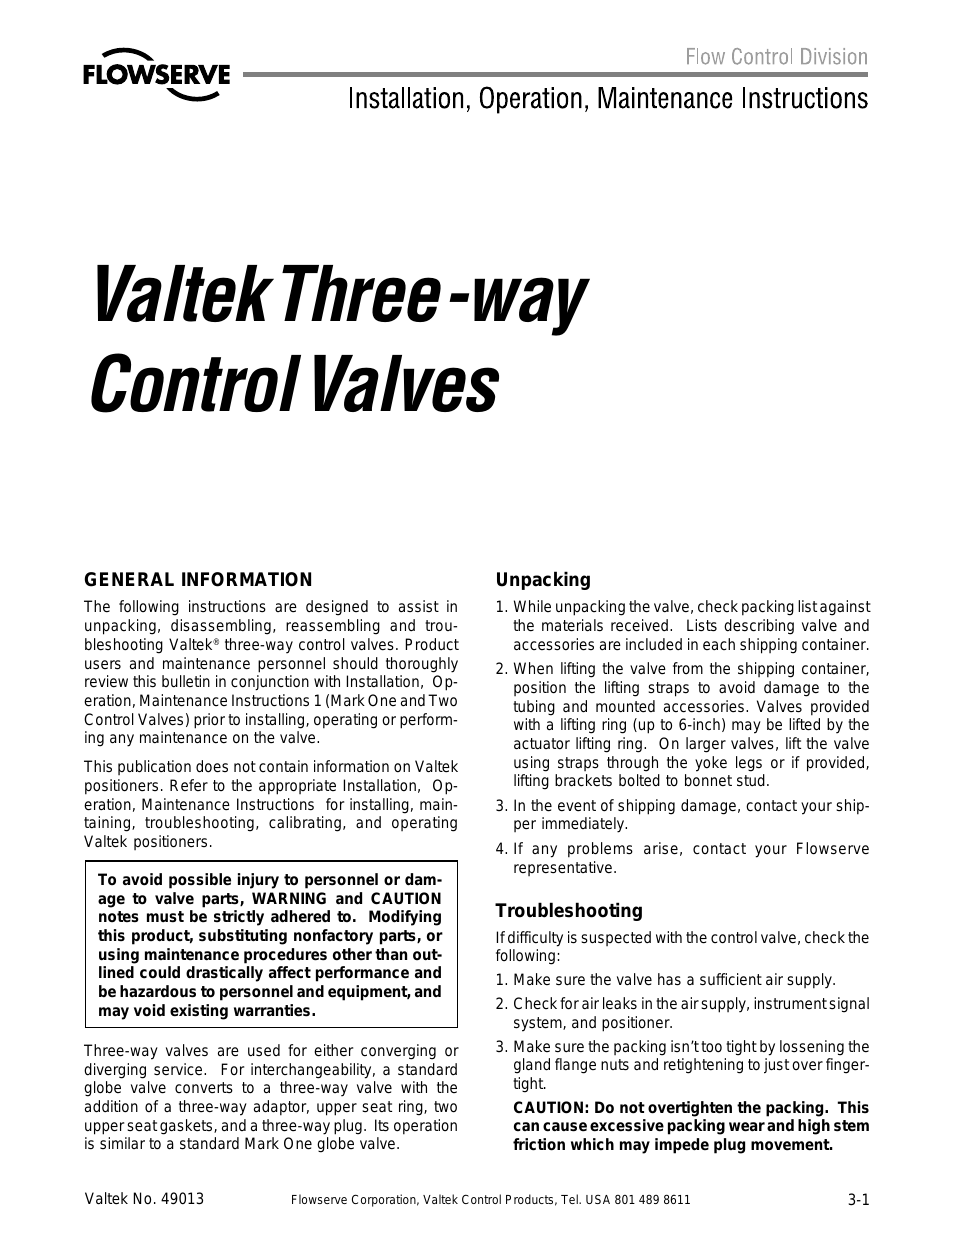 Valtek Mark One Three-way Control Valve